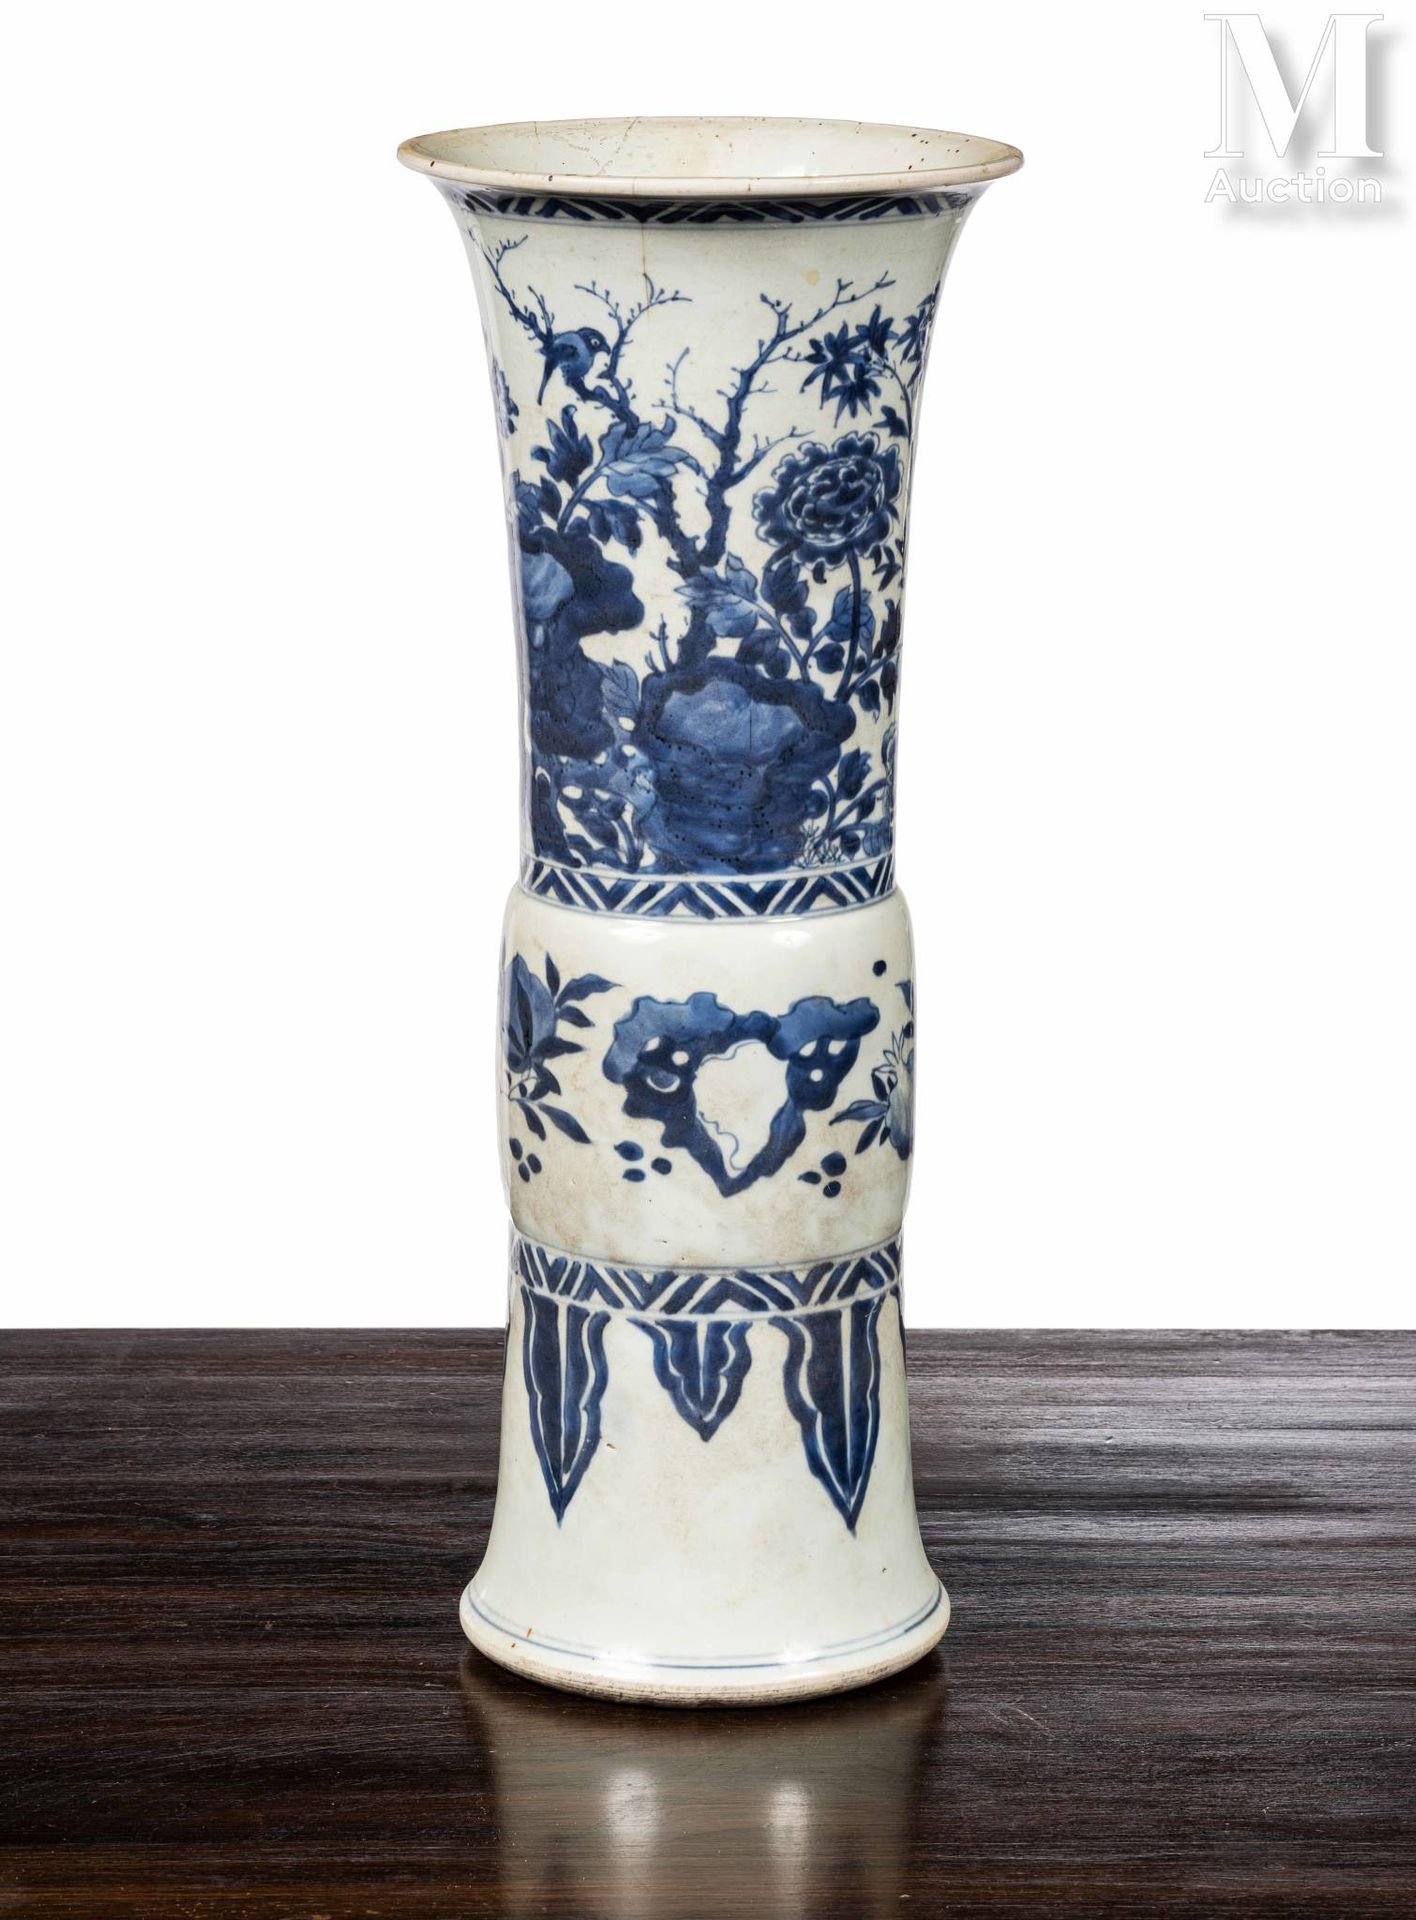 CHINE, Epoque Transition, XVIIe siècle 青花瓷古瓶，装在饰有香蕉叶的高宽脚上，中间的圆形瓶身饰有花和水果，高高的喇叭口颈部&hellip;